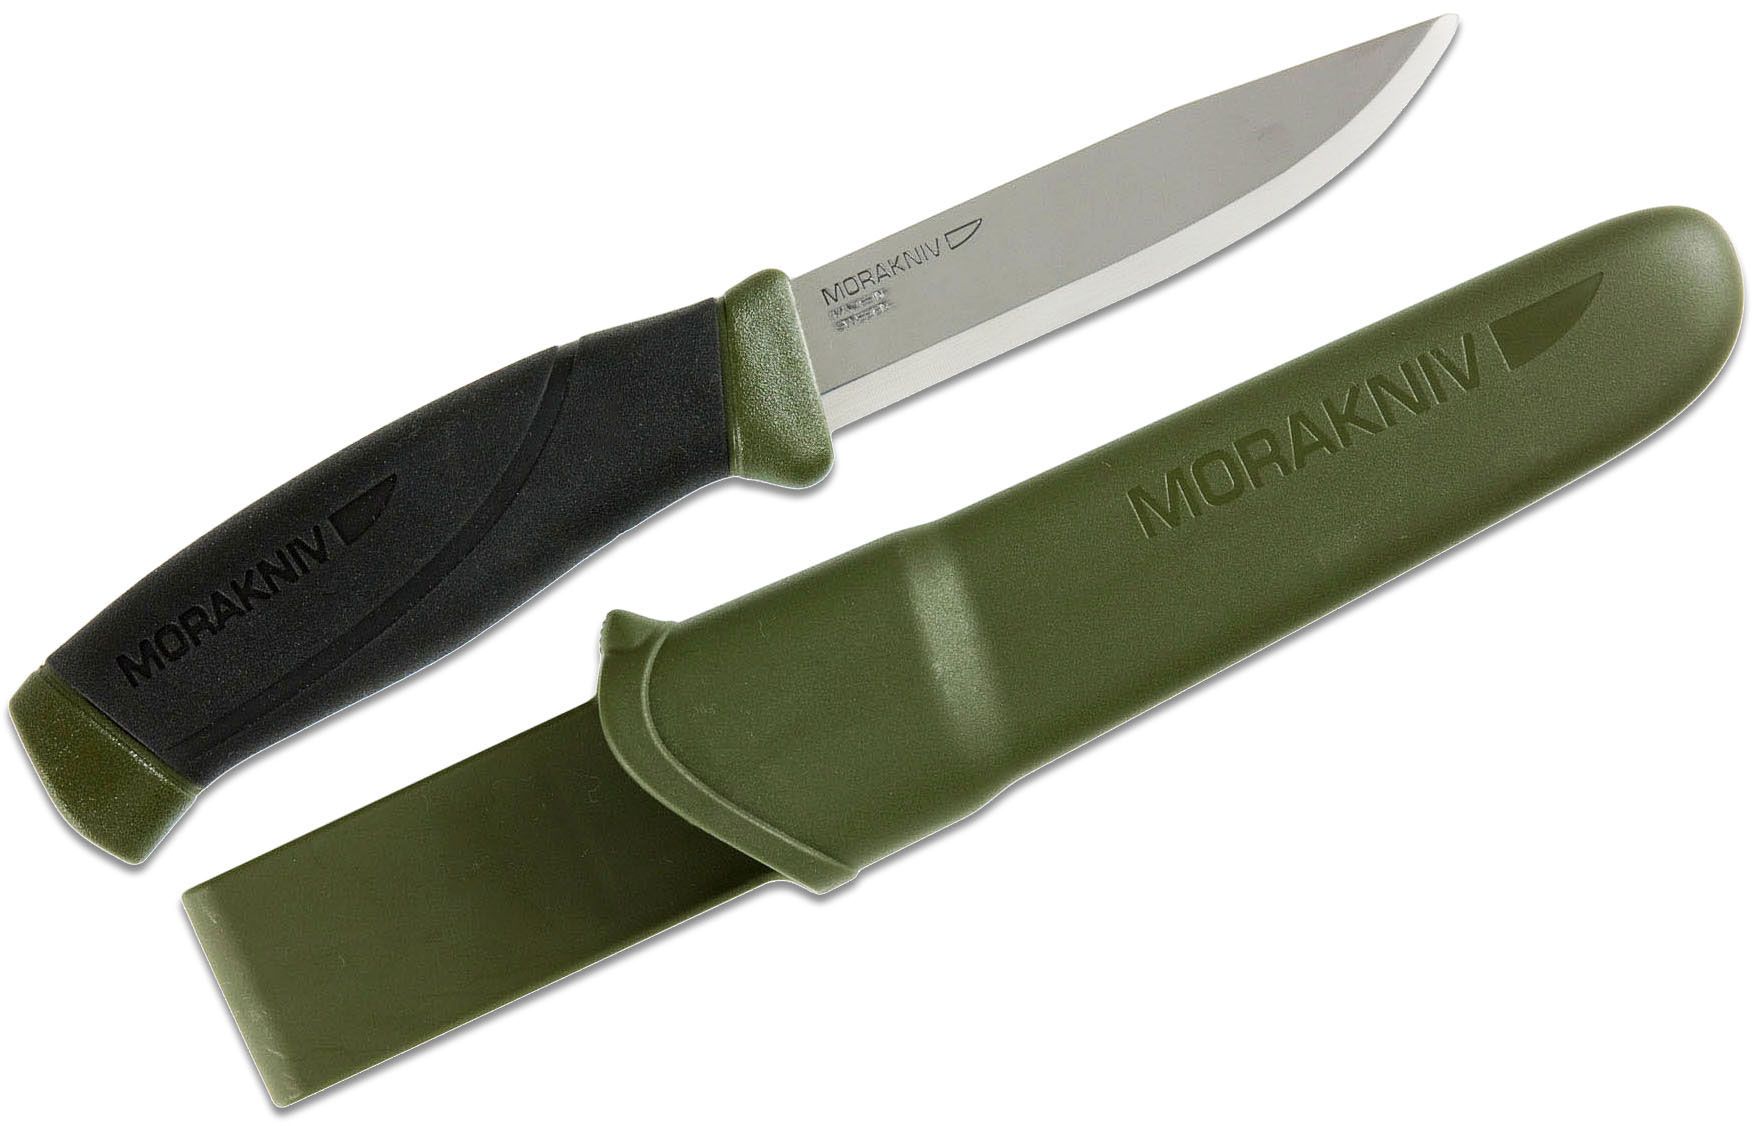 8.25 MORA MORAKNIV MILITARY GREEN BASIC 511 CARBON STEEL KNIFE Survival  Sweden